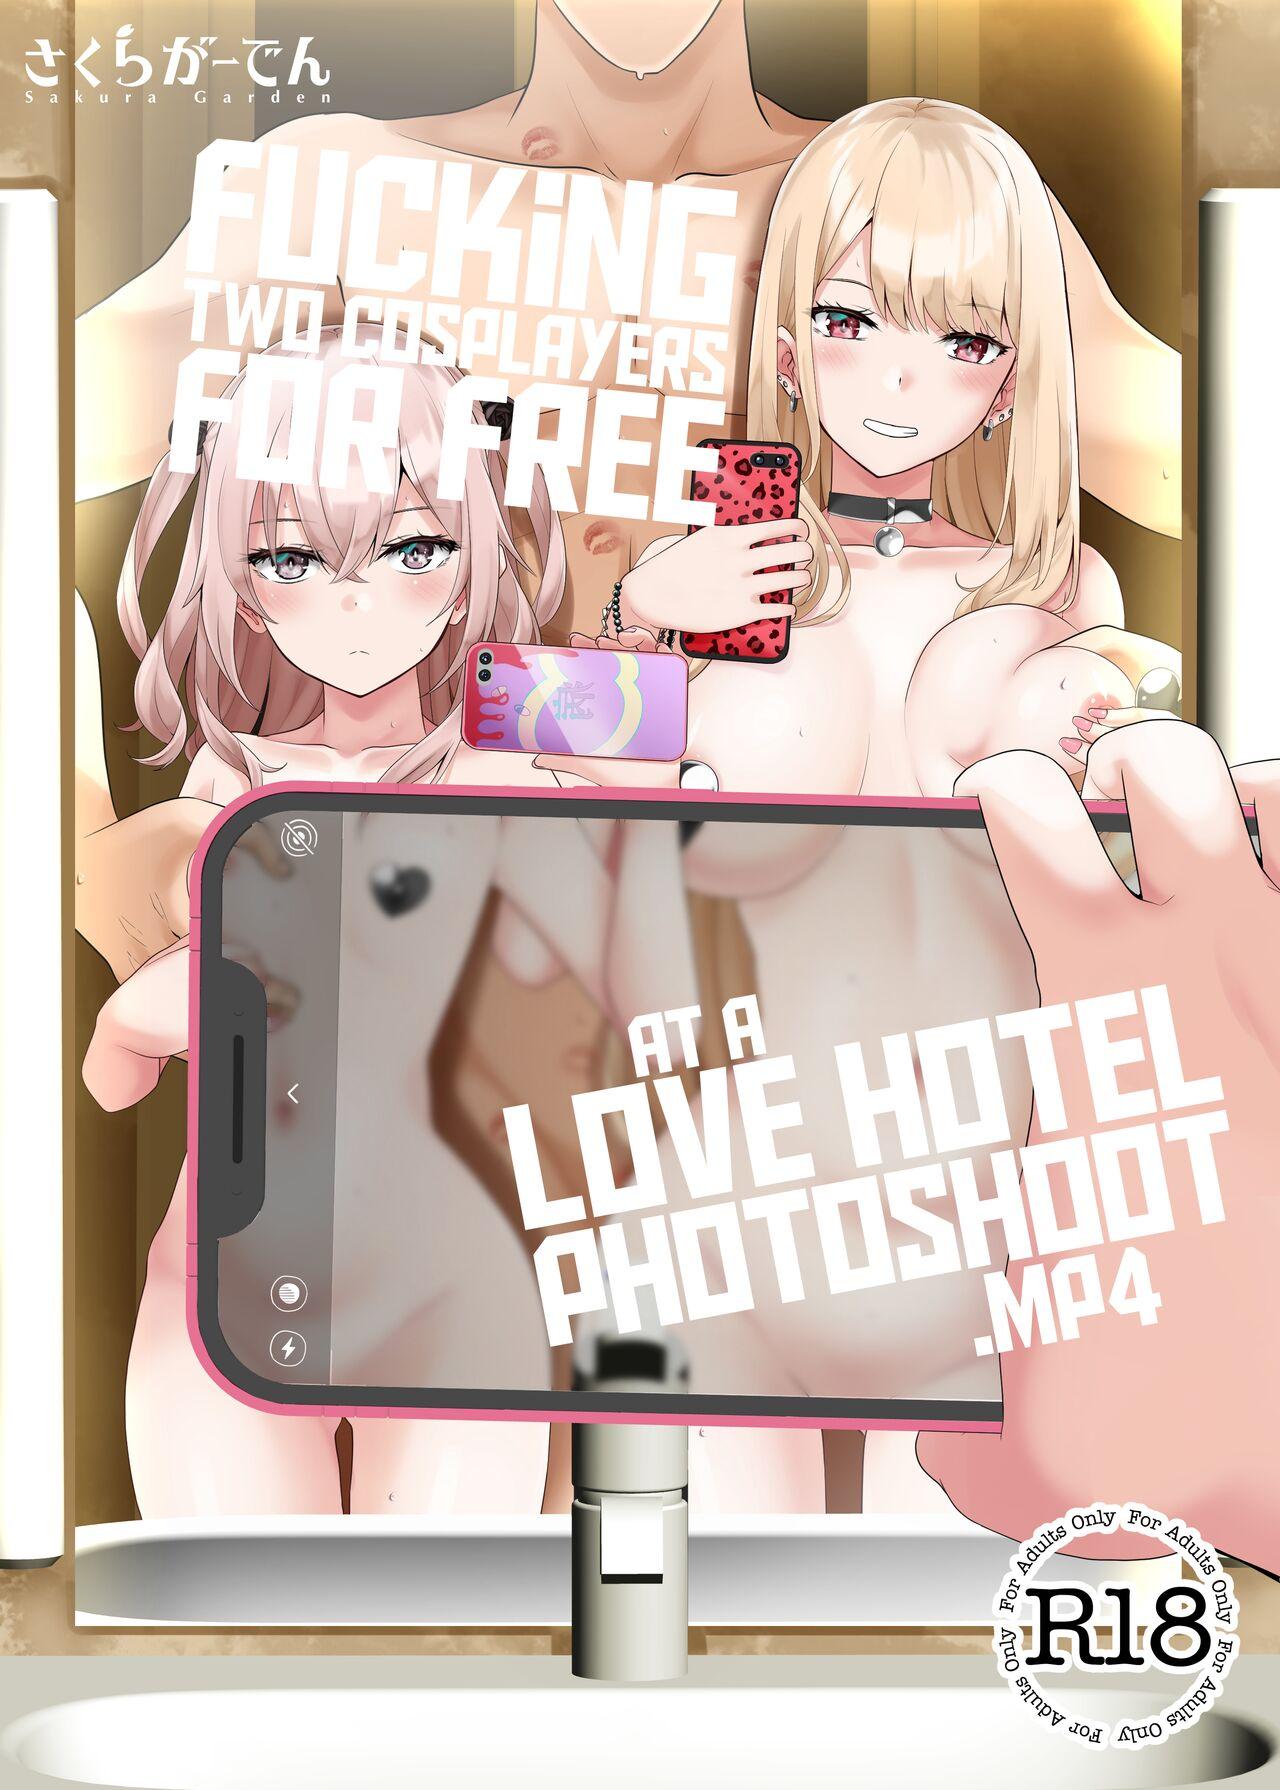 Hokomi 0 Yen Kosu Pako Satsueikai.mp4 | Fucking Two Cosplayers For Free at a Love Hotel Photoshoot.mp4 1